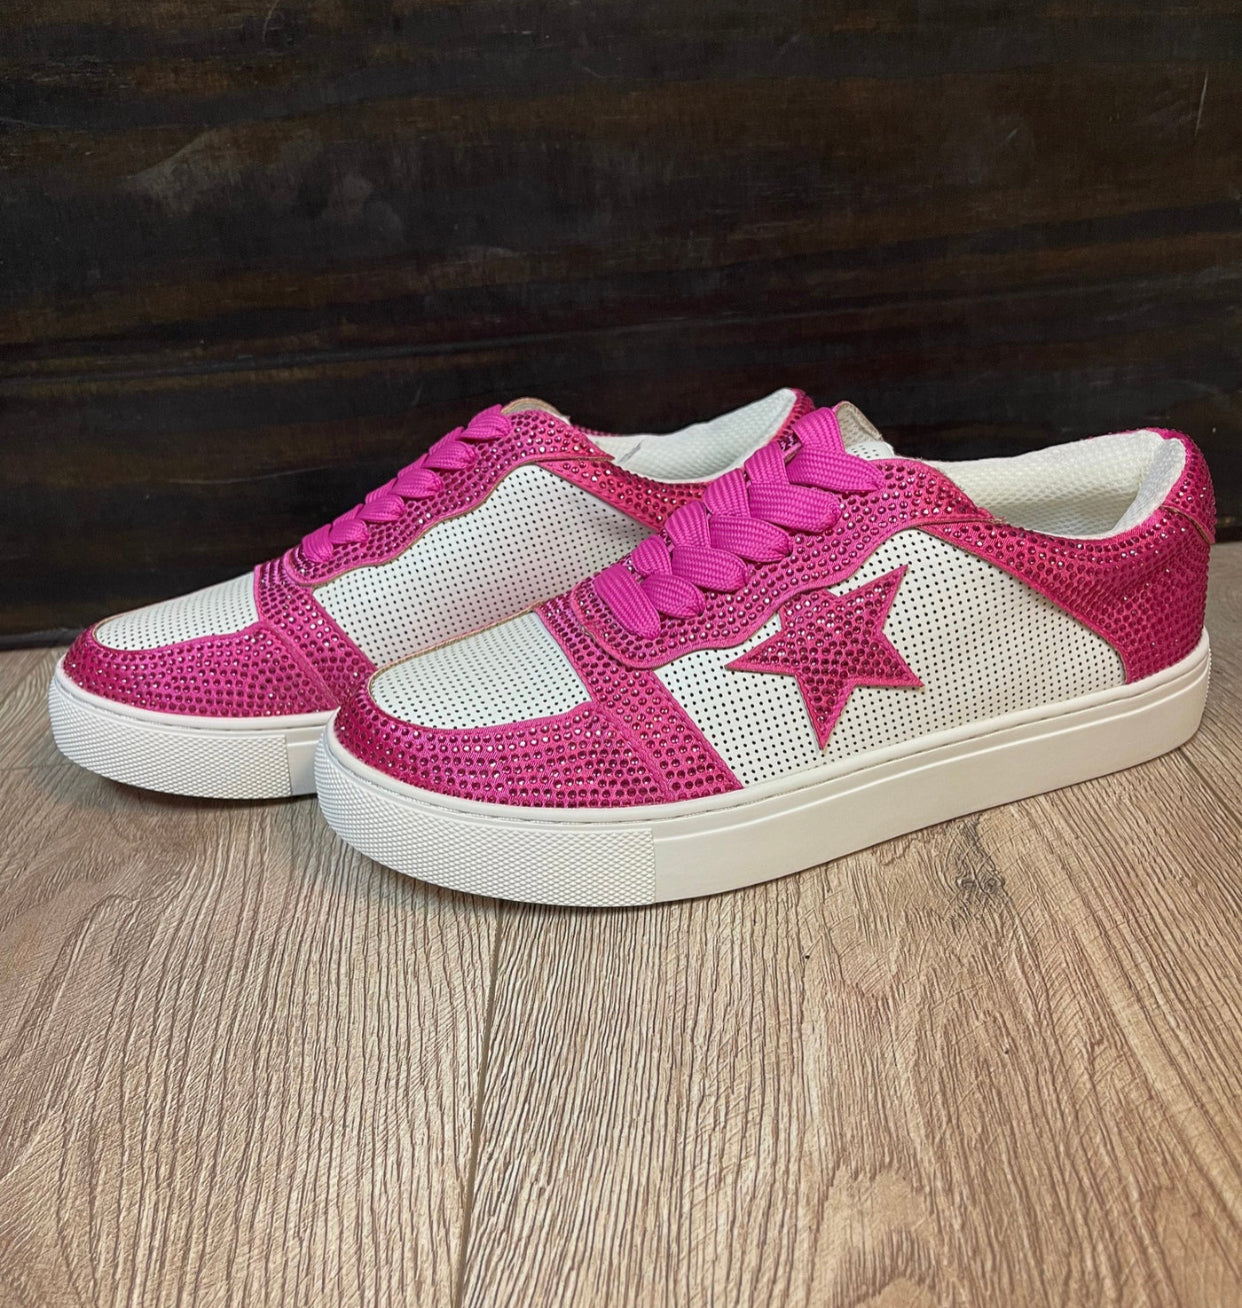 Hot pink Jewel Tennis shoes